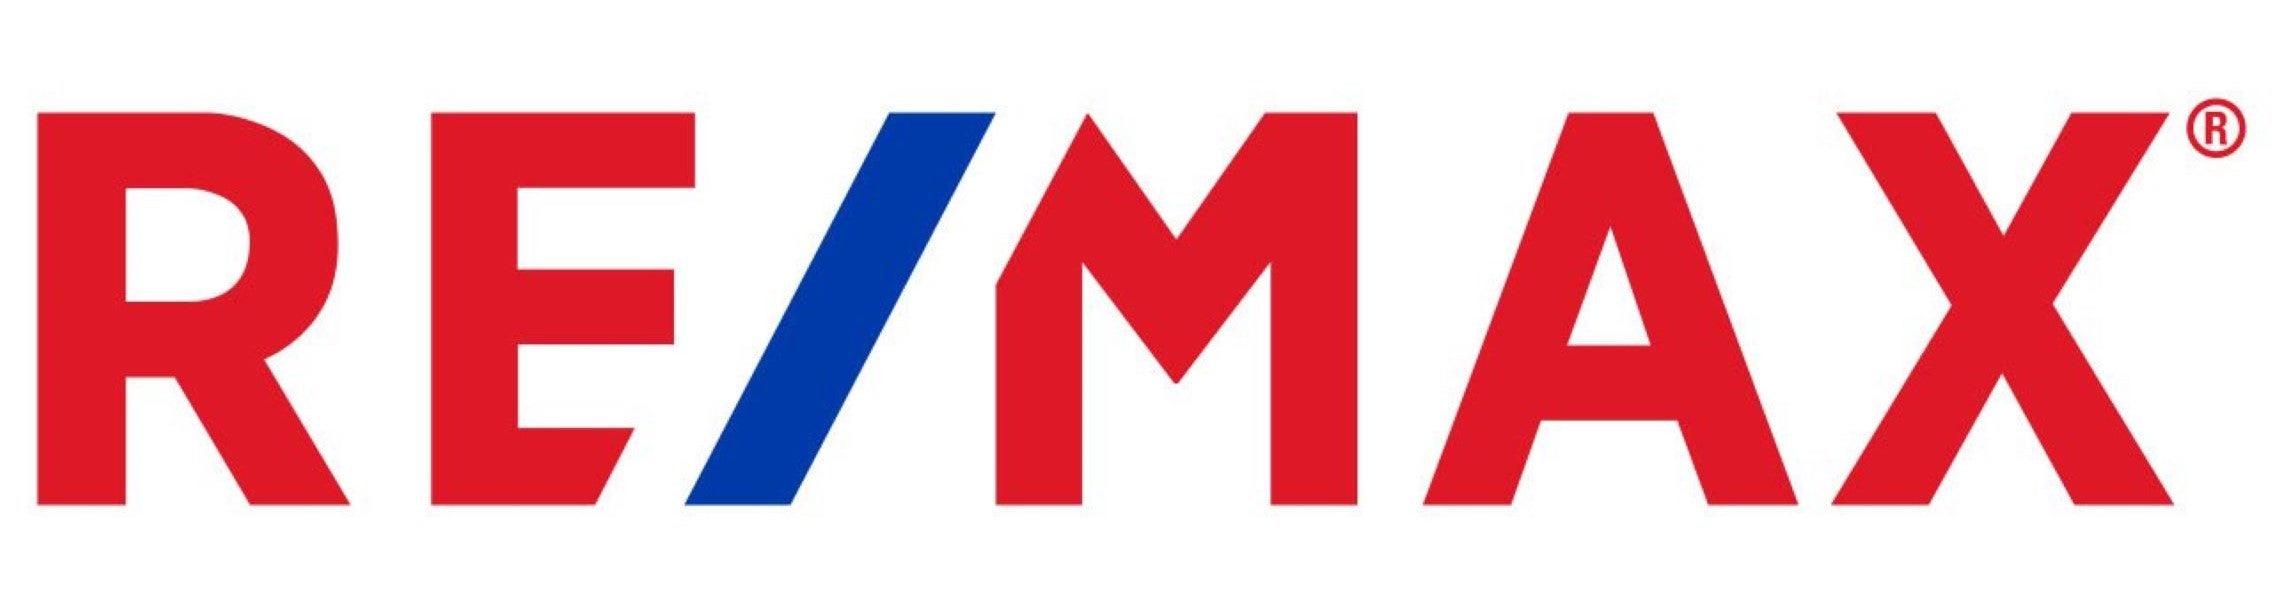 Remax logo (no border)